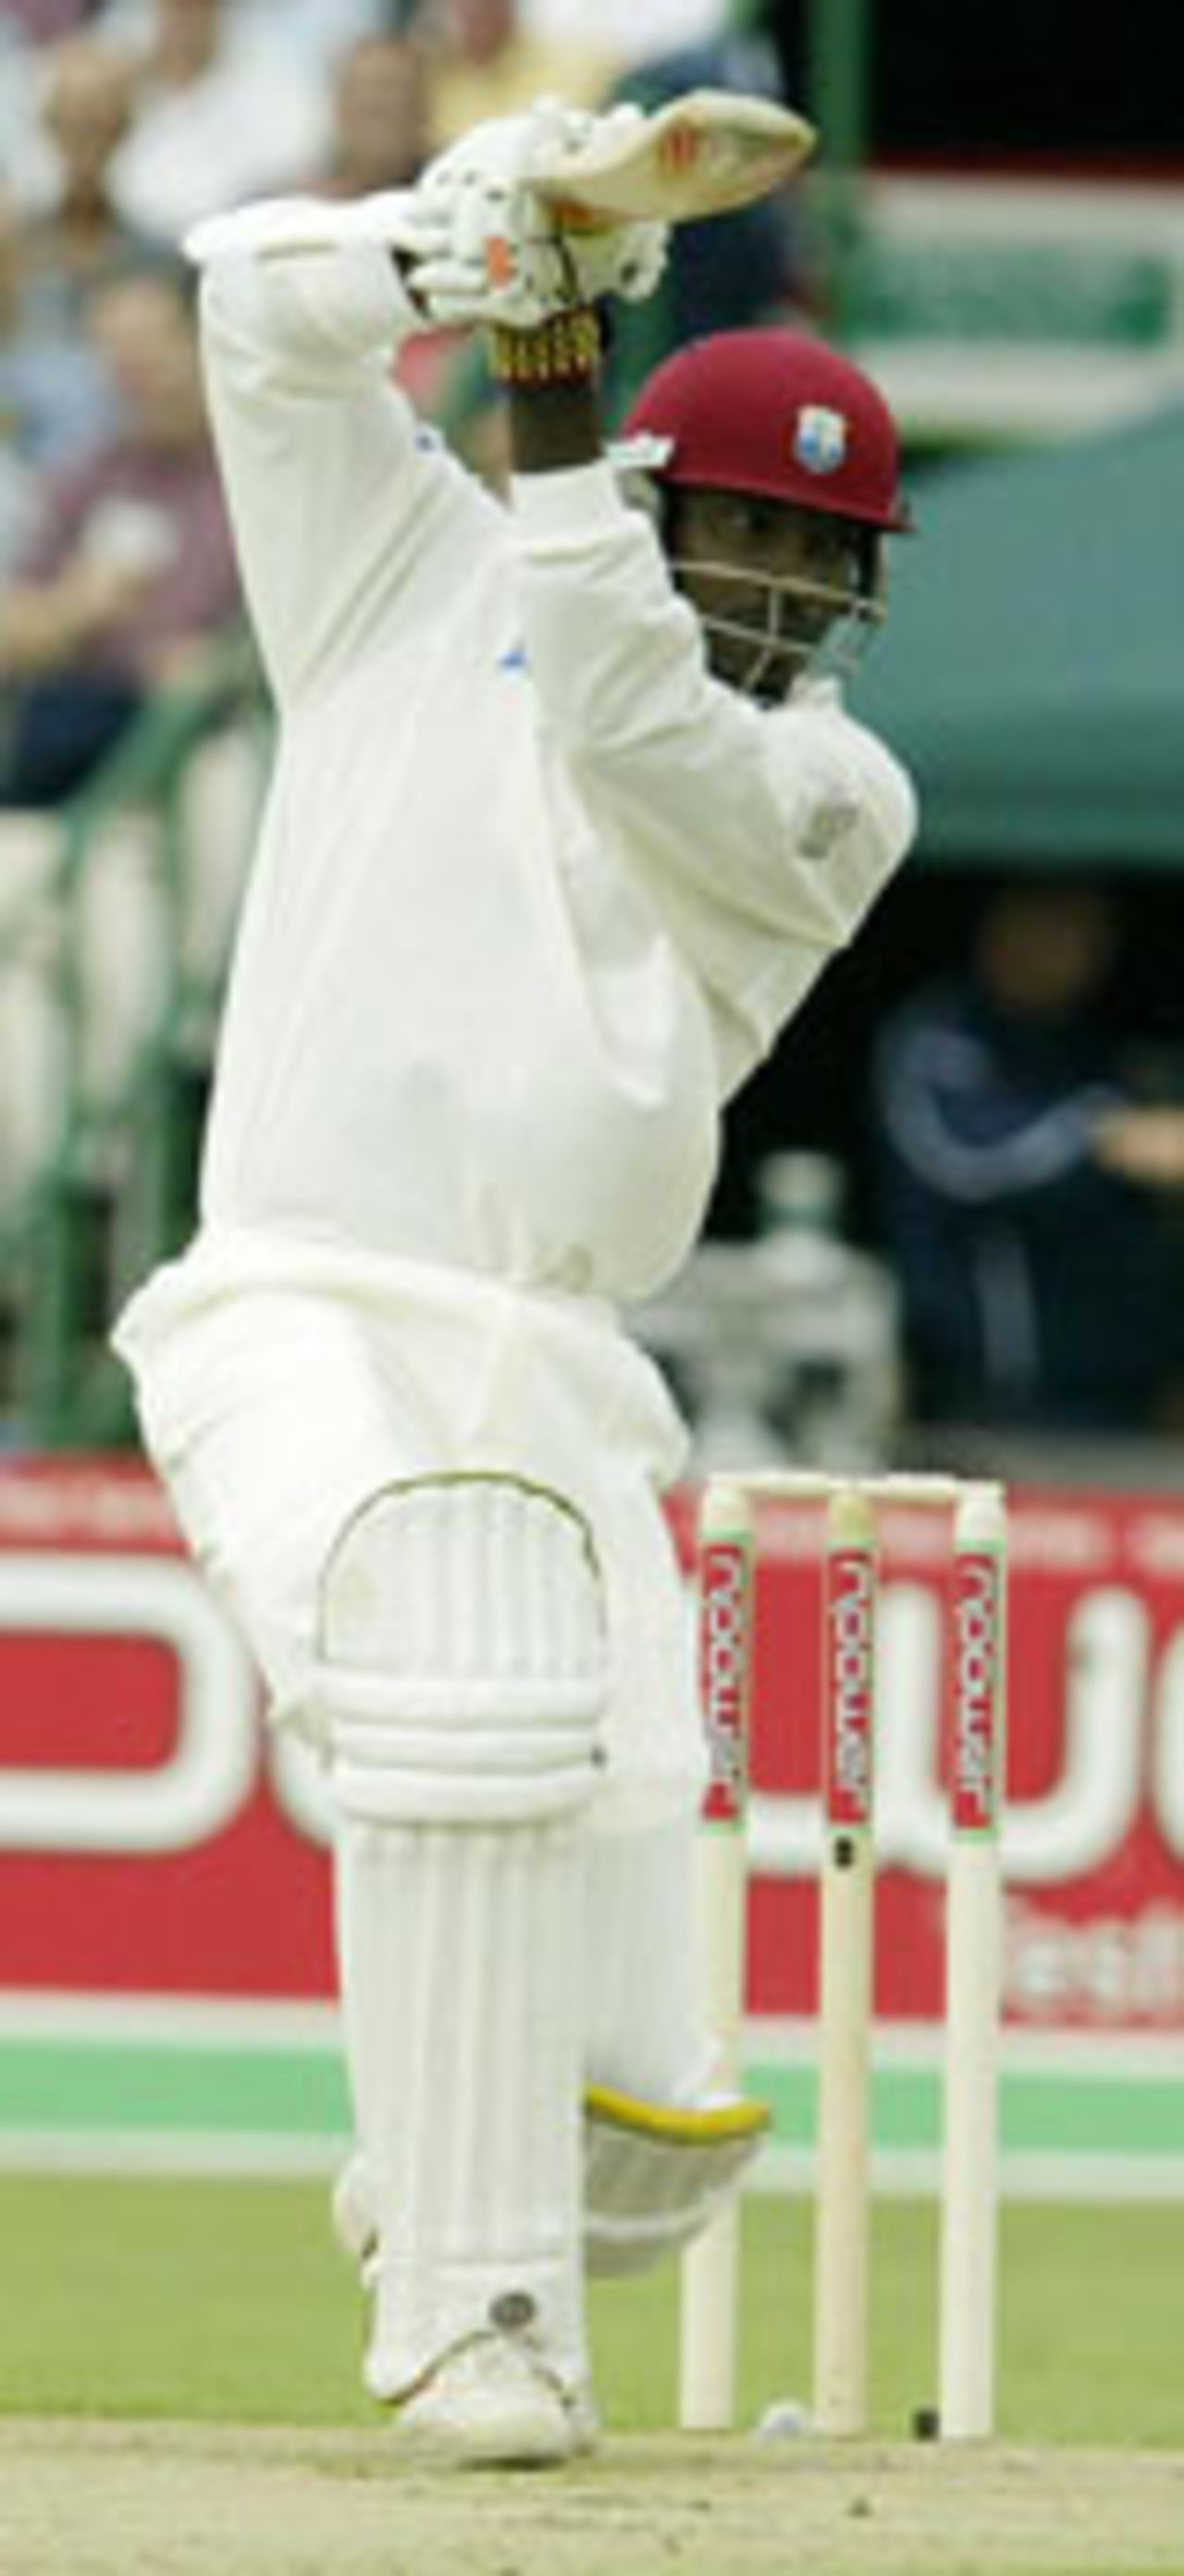 Chris Gayle batting against England, England v West Indies, August 2003